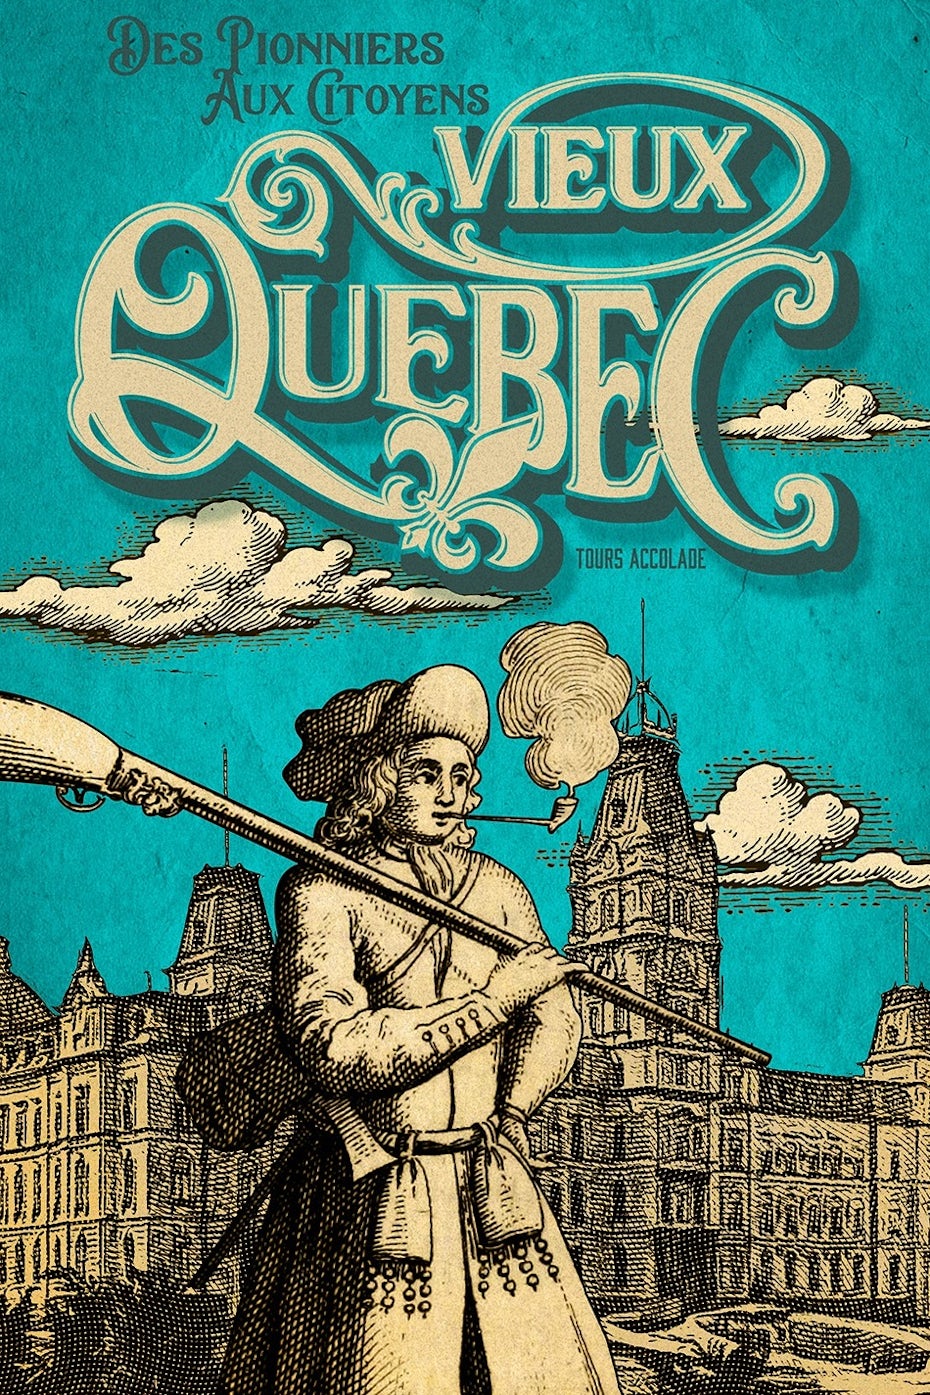 Travel poster for Quebec